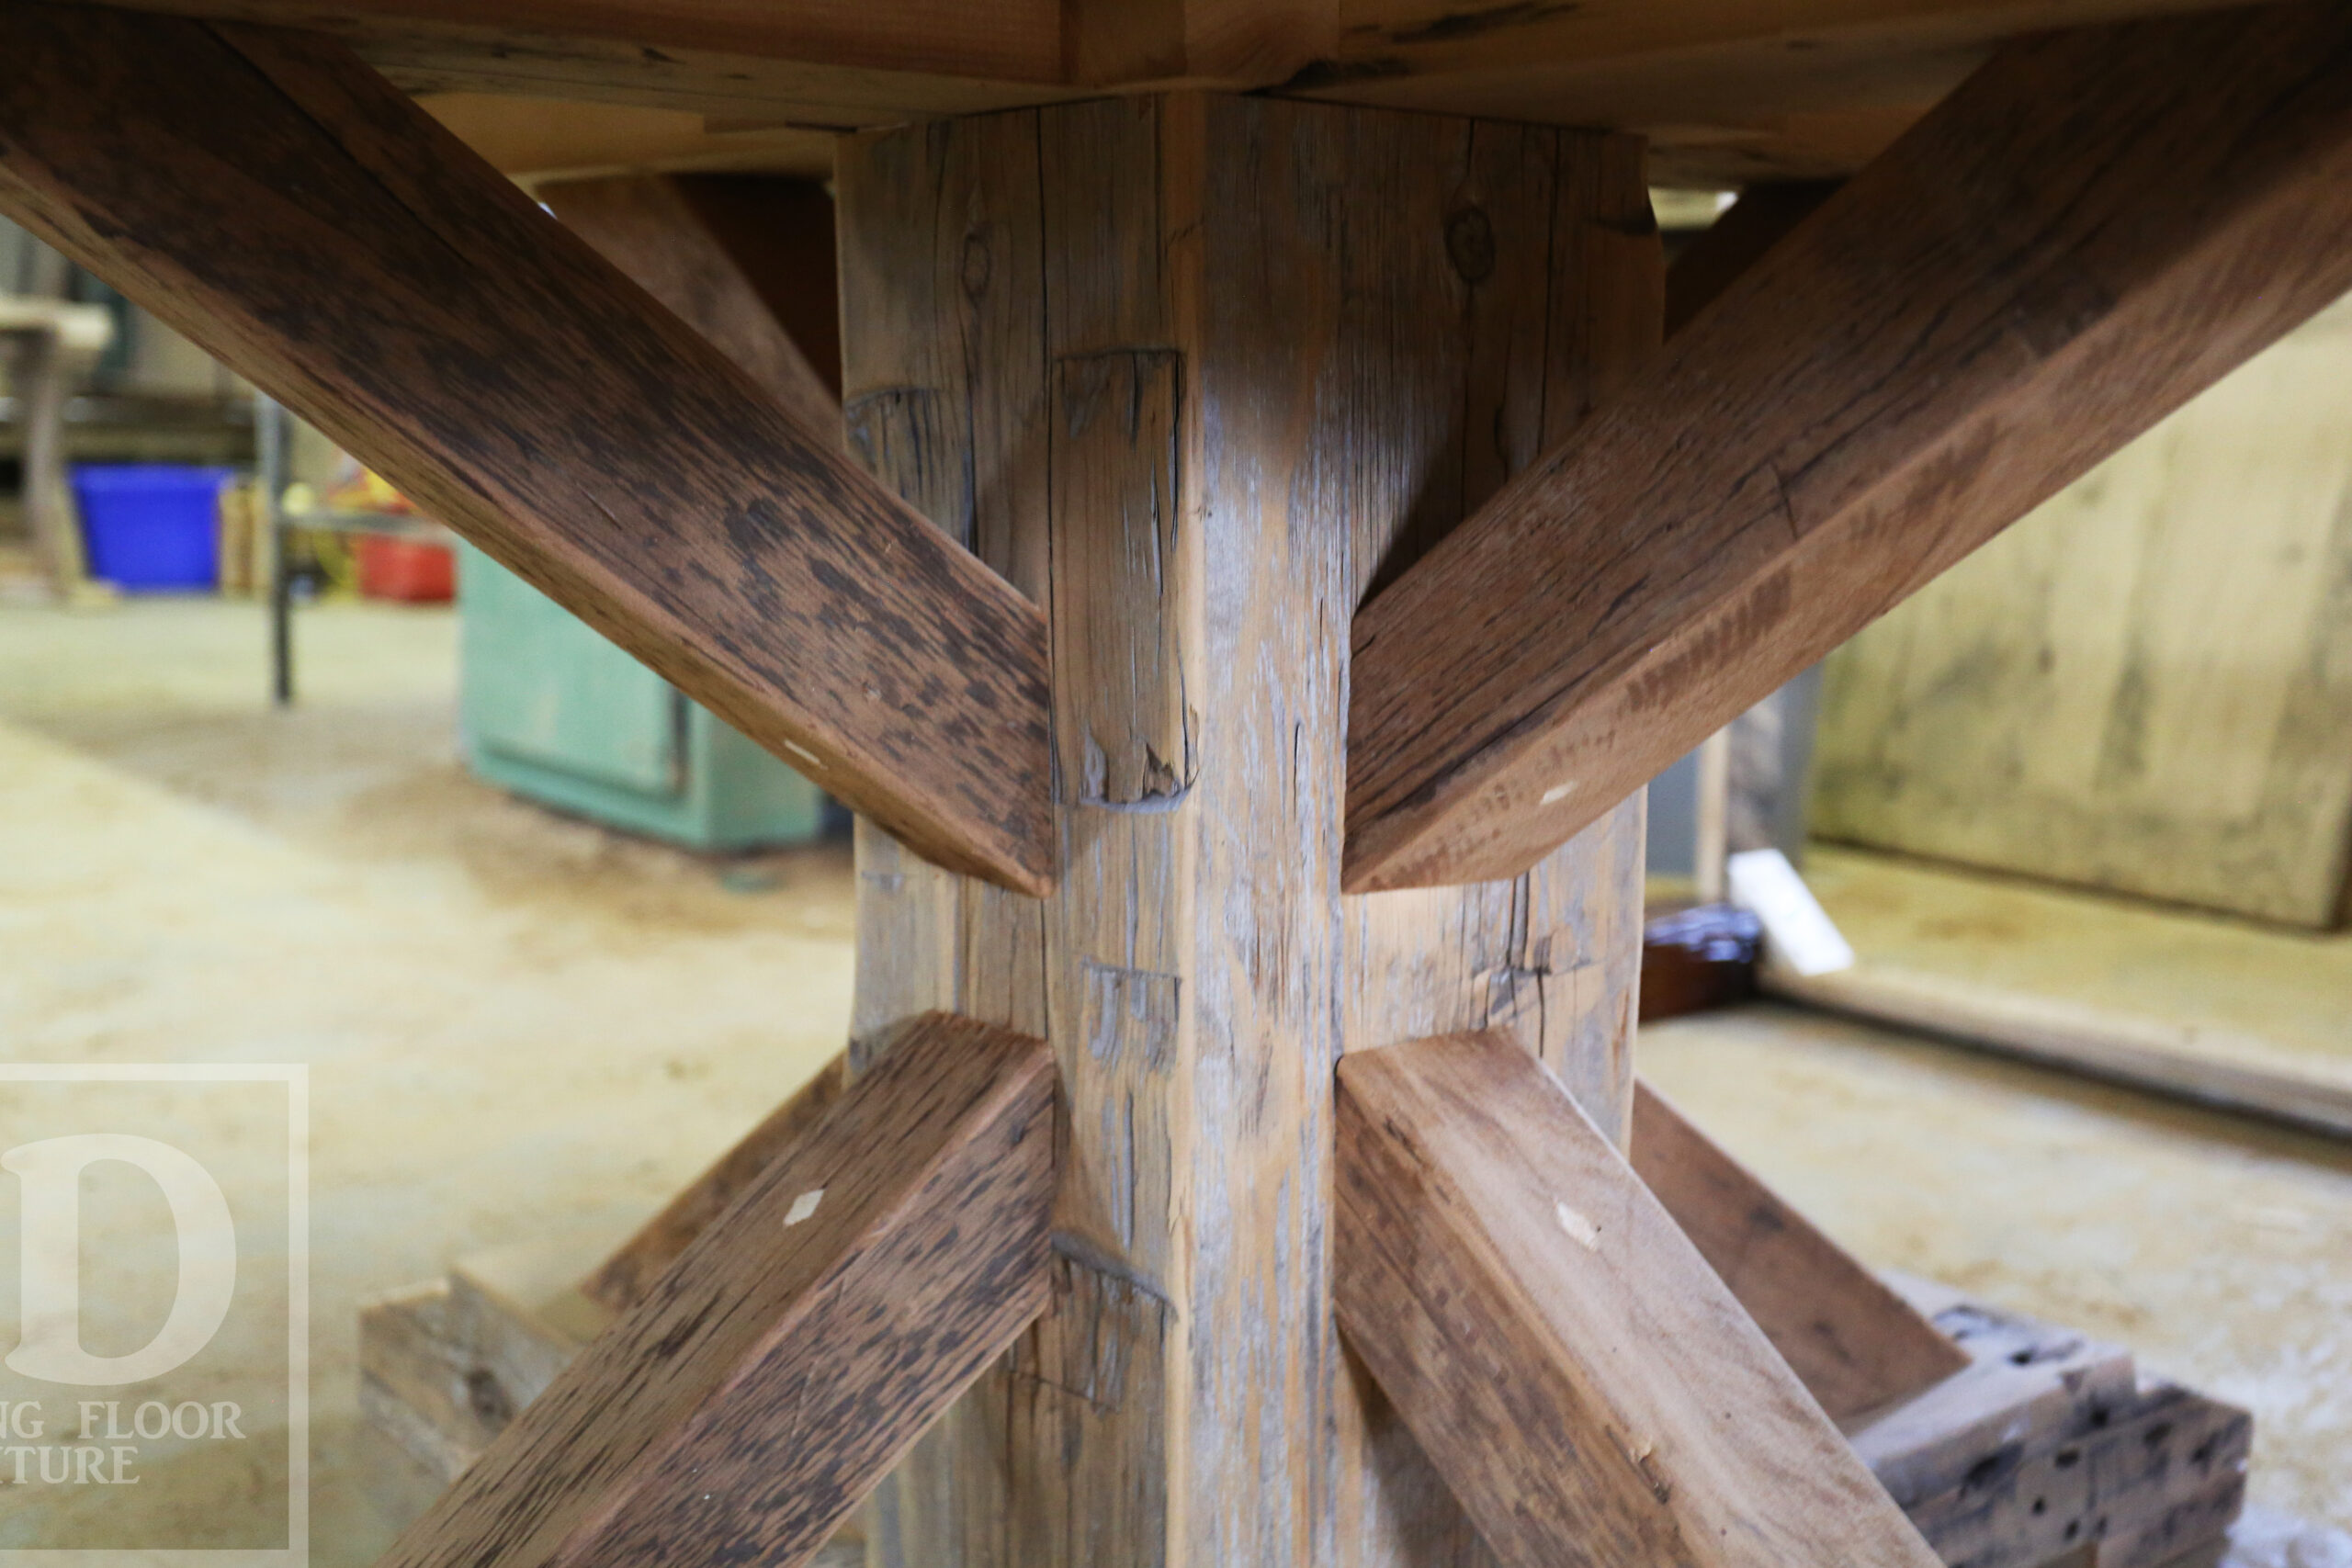 Octagon Reclaimed Wood Table by HD Threshing Floor Furniture / www.table.ca